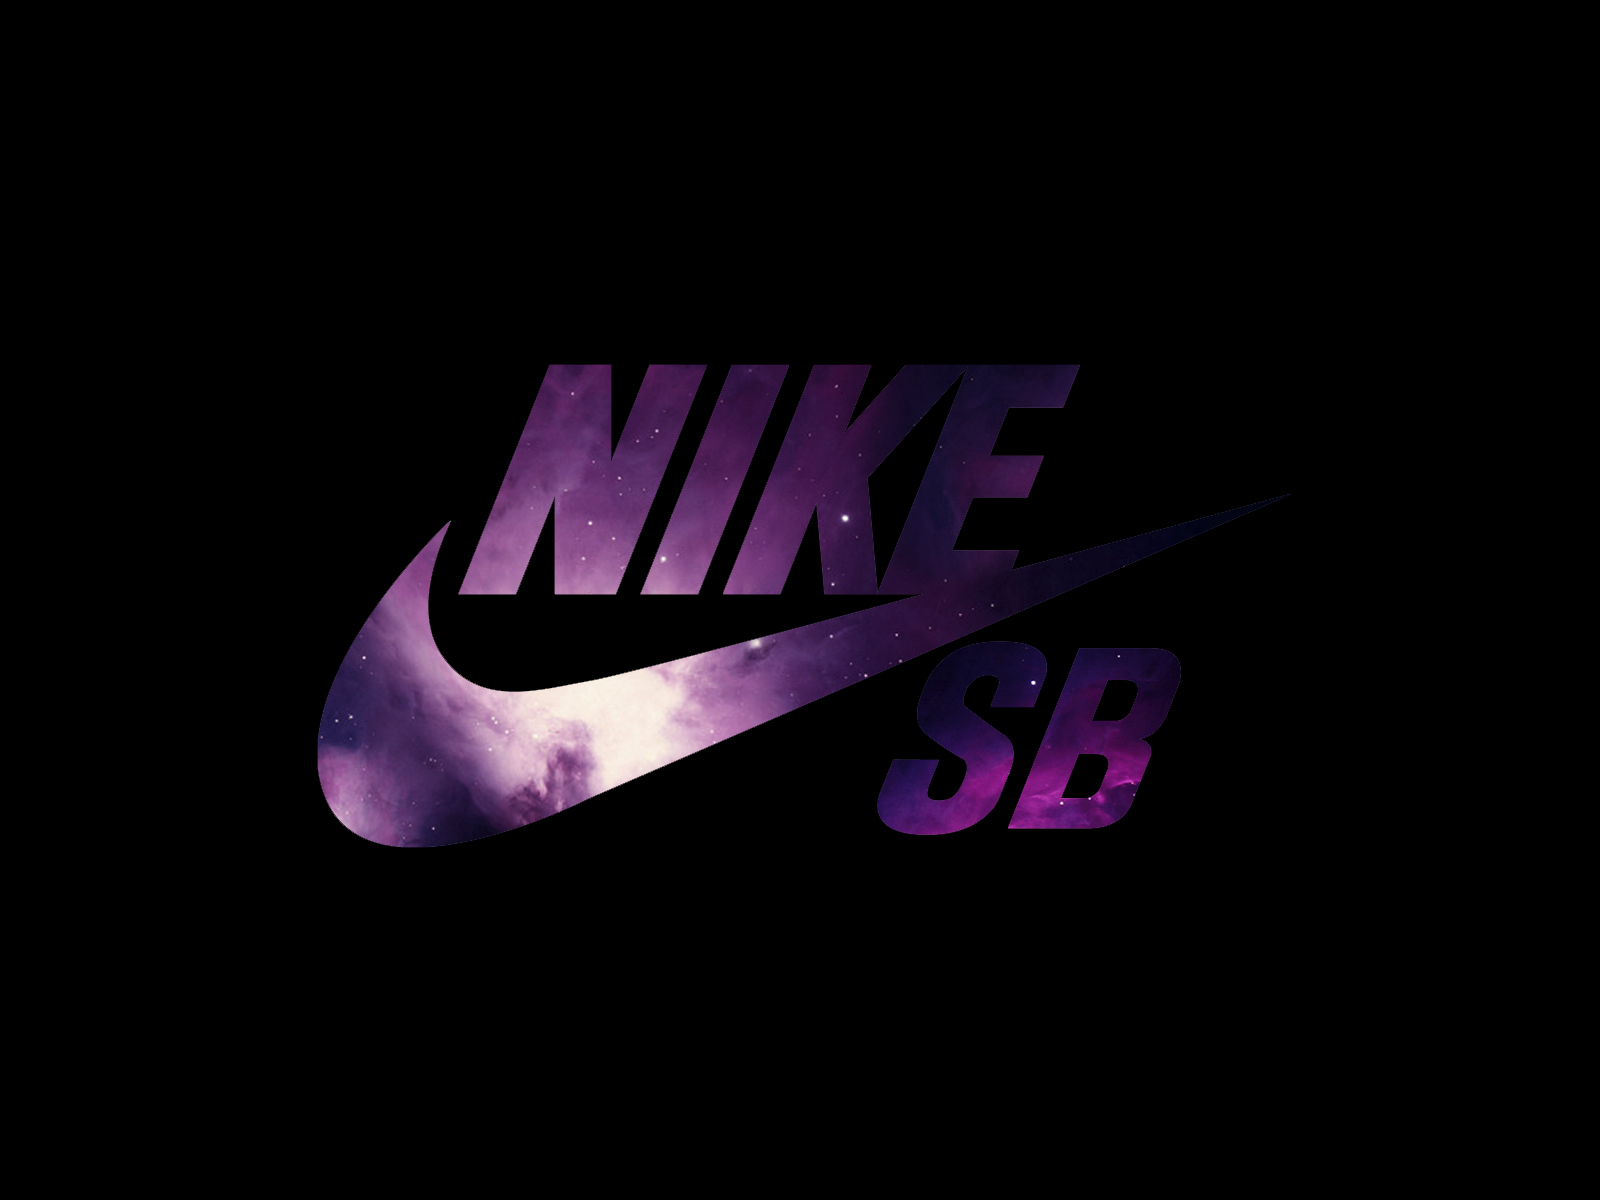 Sb logo Black and White Stock Photos & Images - Alamy